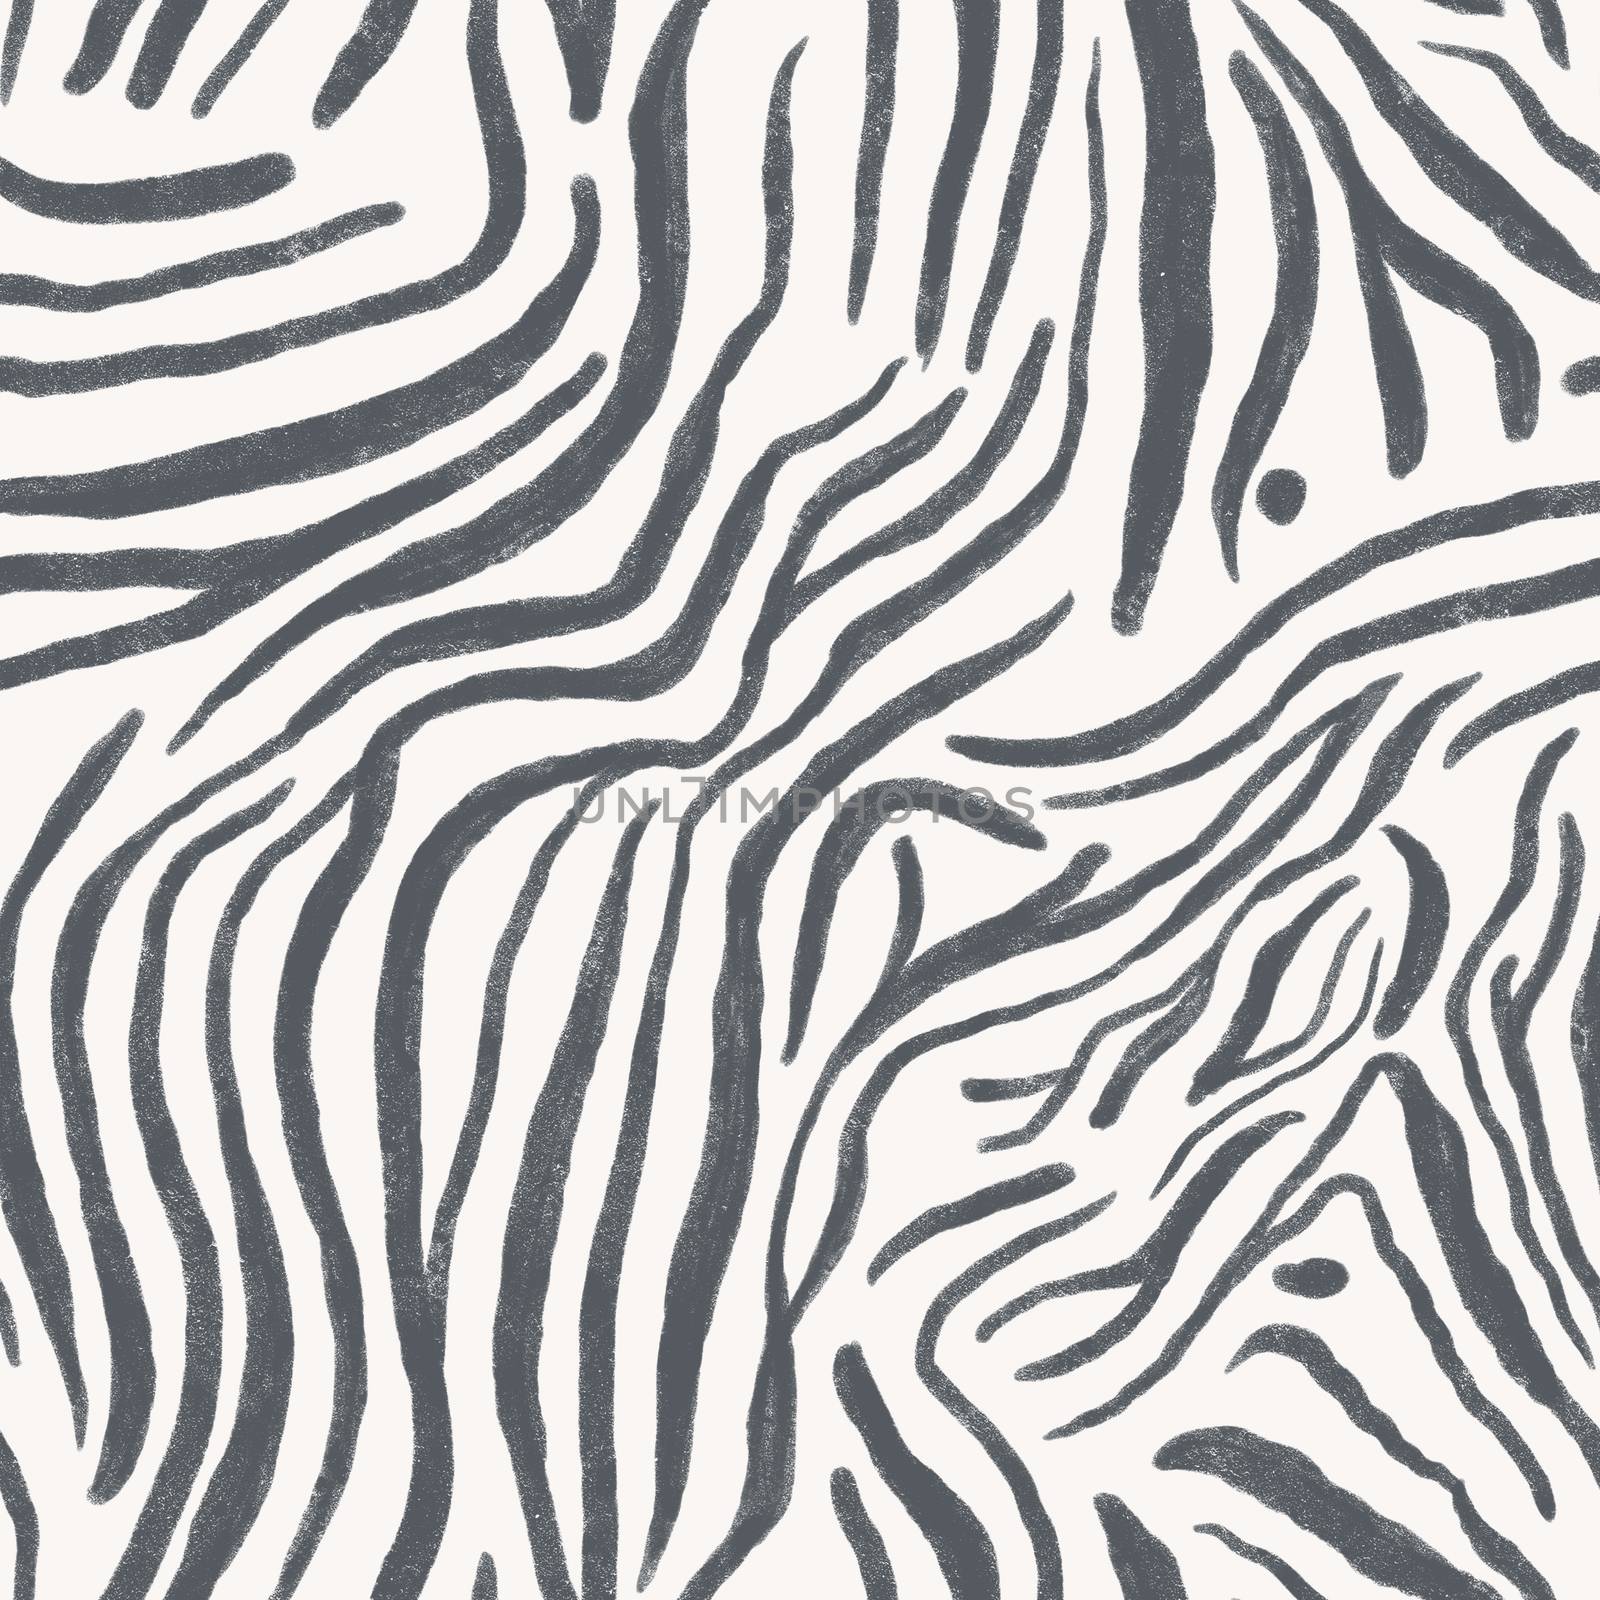 Animal print, Zebra skin, stripes seamless pattern on white background. Black and white handrawn texture. Monochrome endless background. Illustration design.